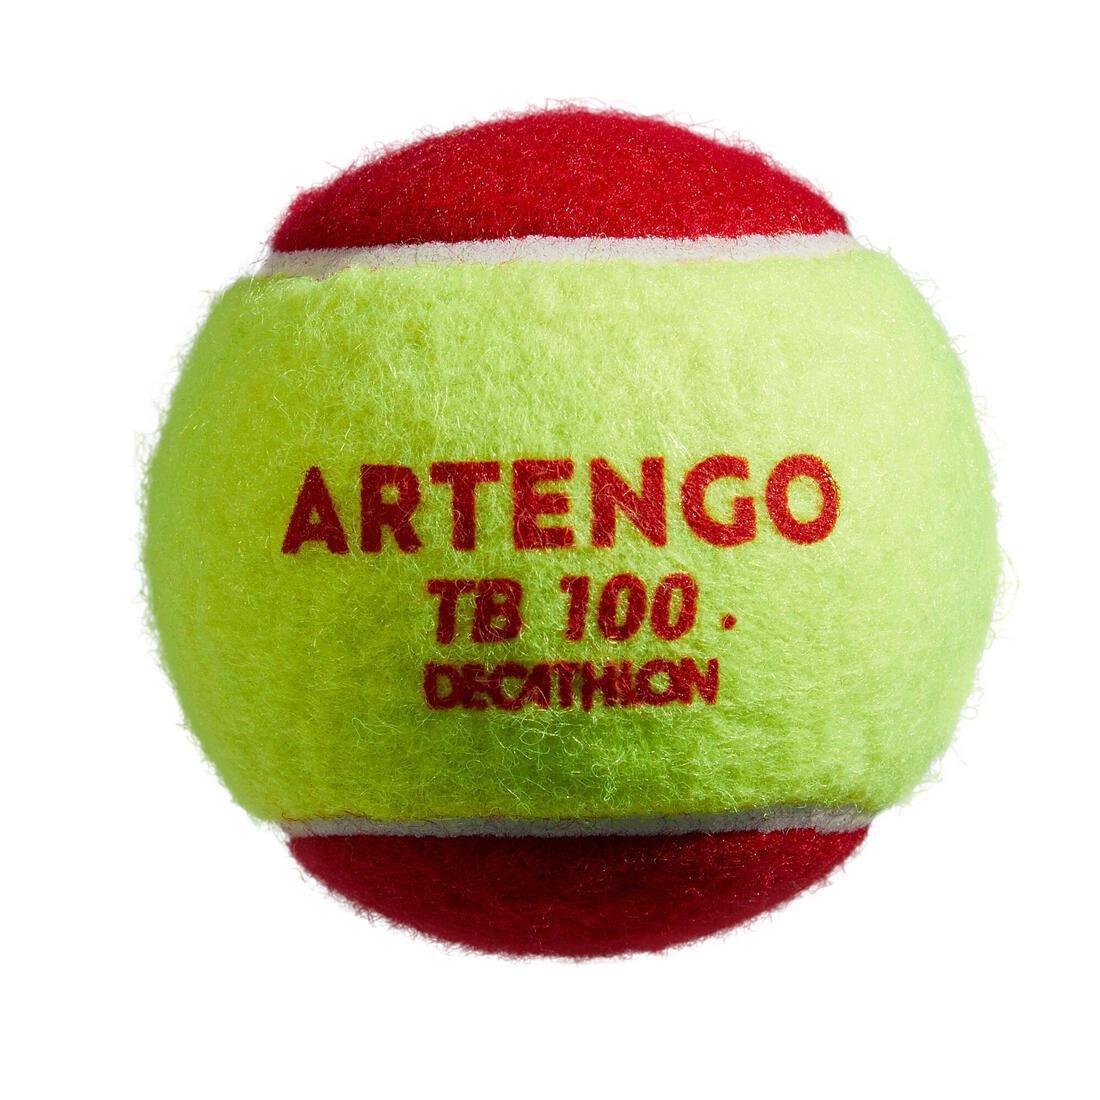 ARTENGO - Tennis Ball Tb100, Red